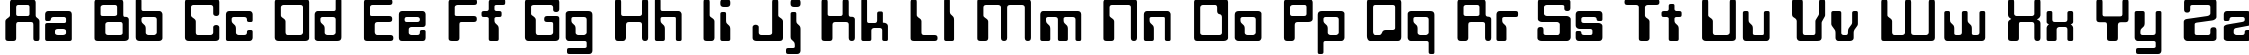 Пример написания английского алфавита шрифтом Techno28